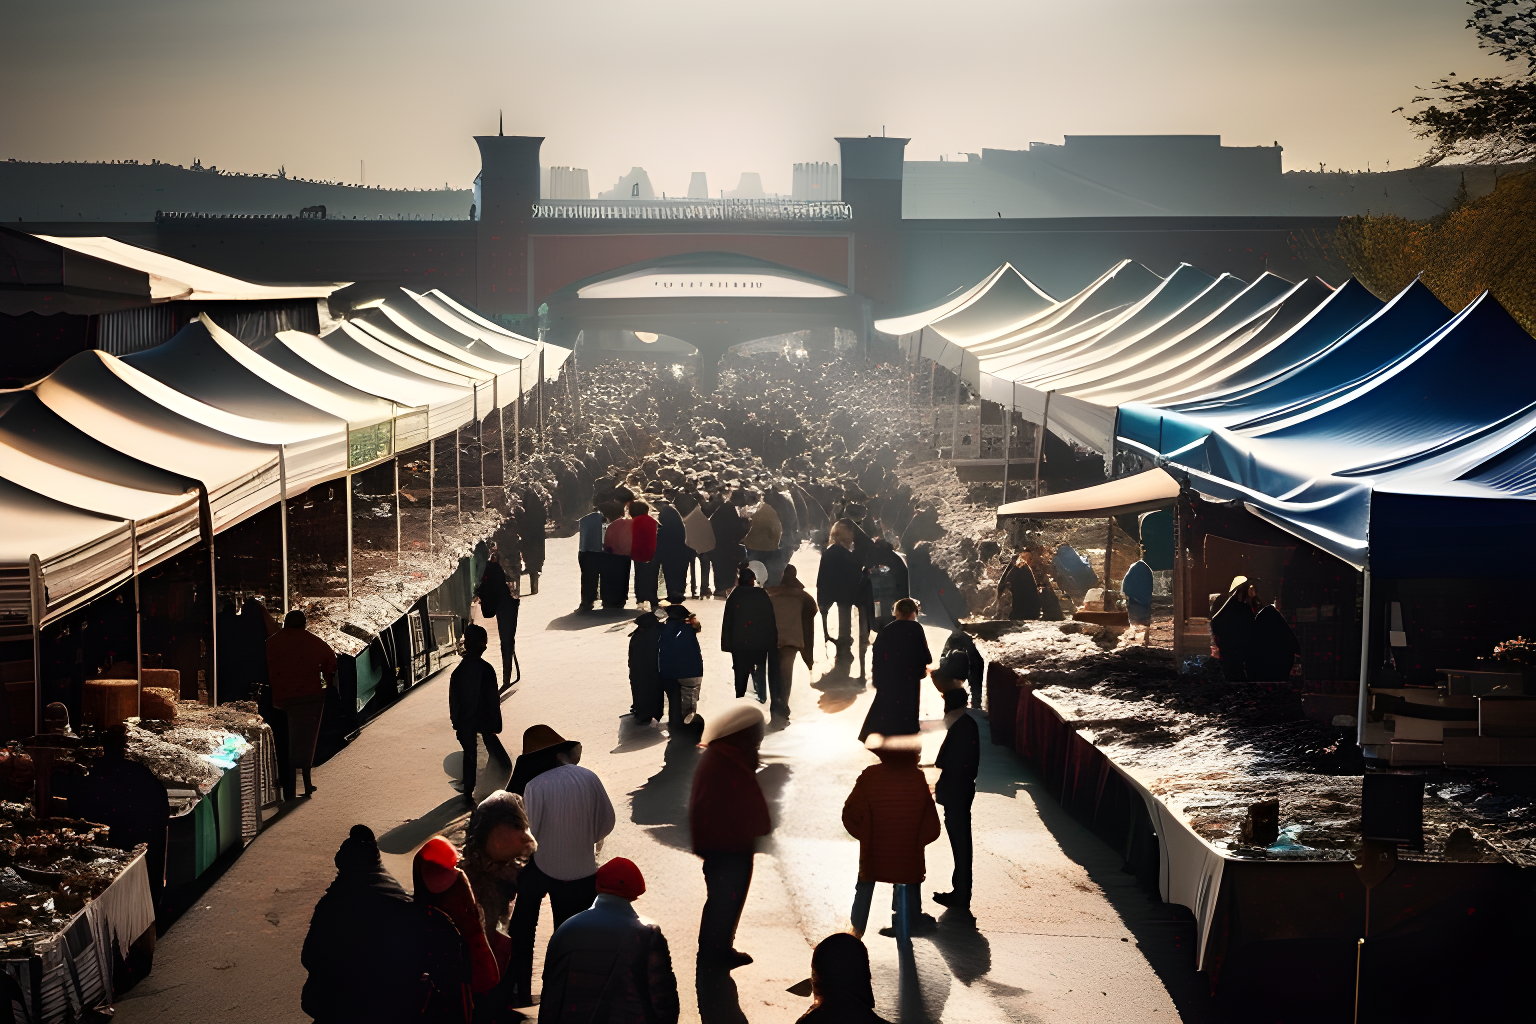 Breathtaking photograph of a busy flea market.